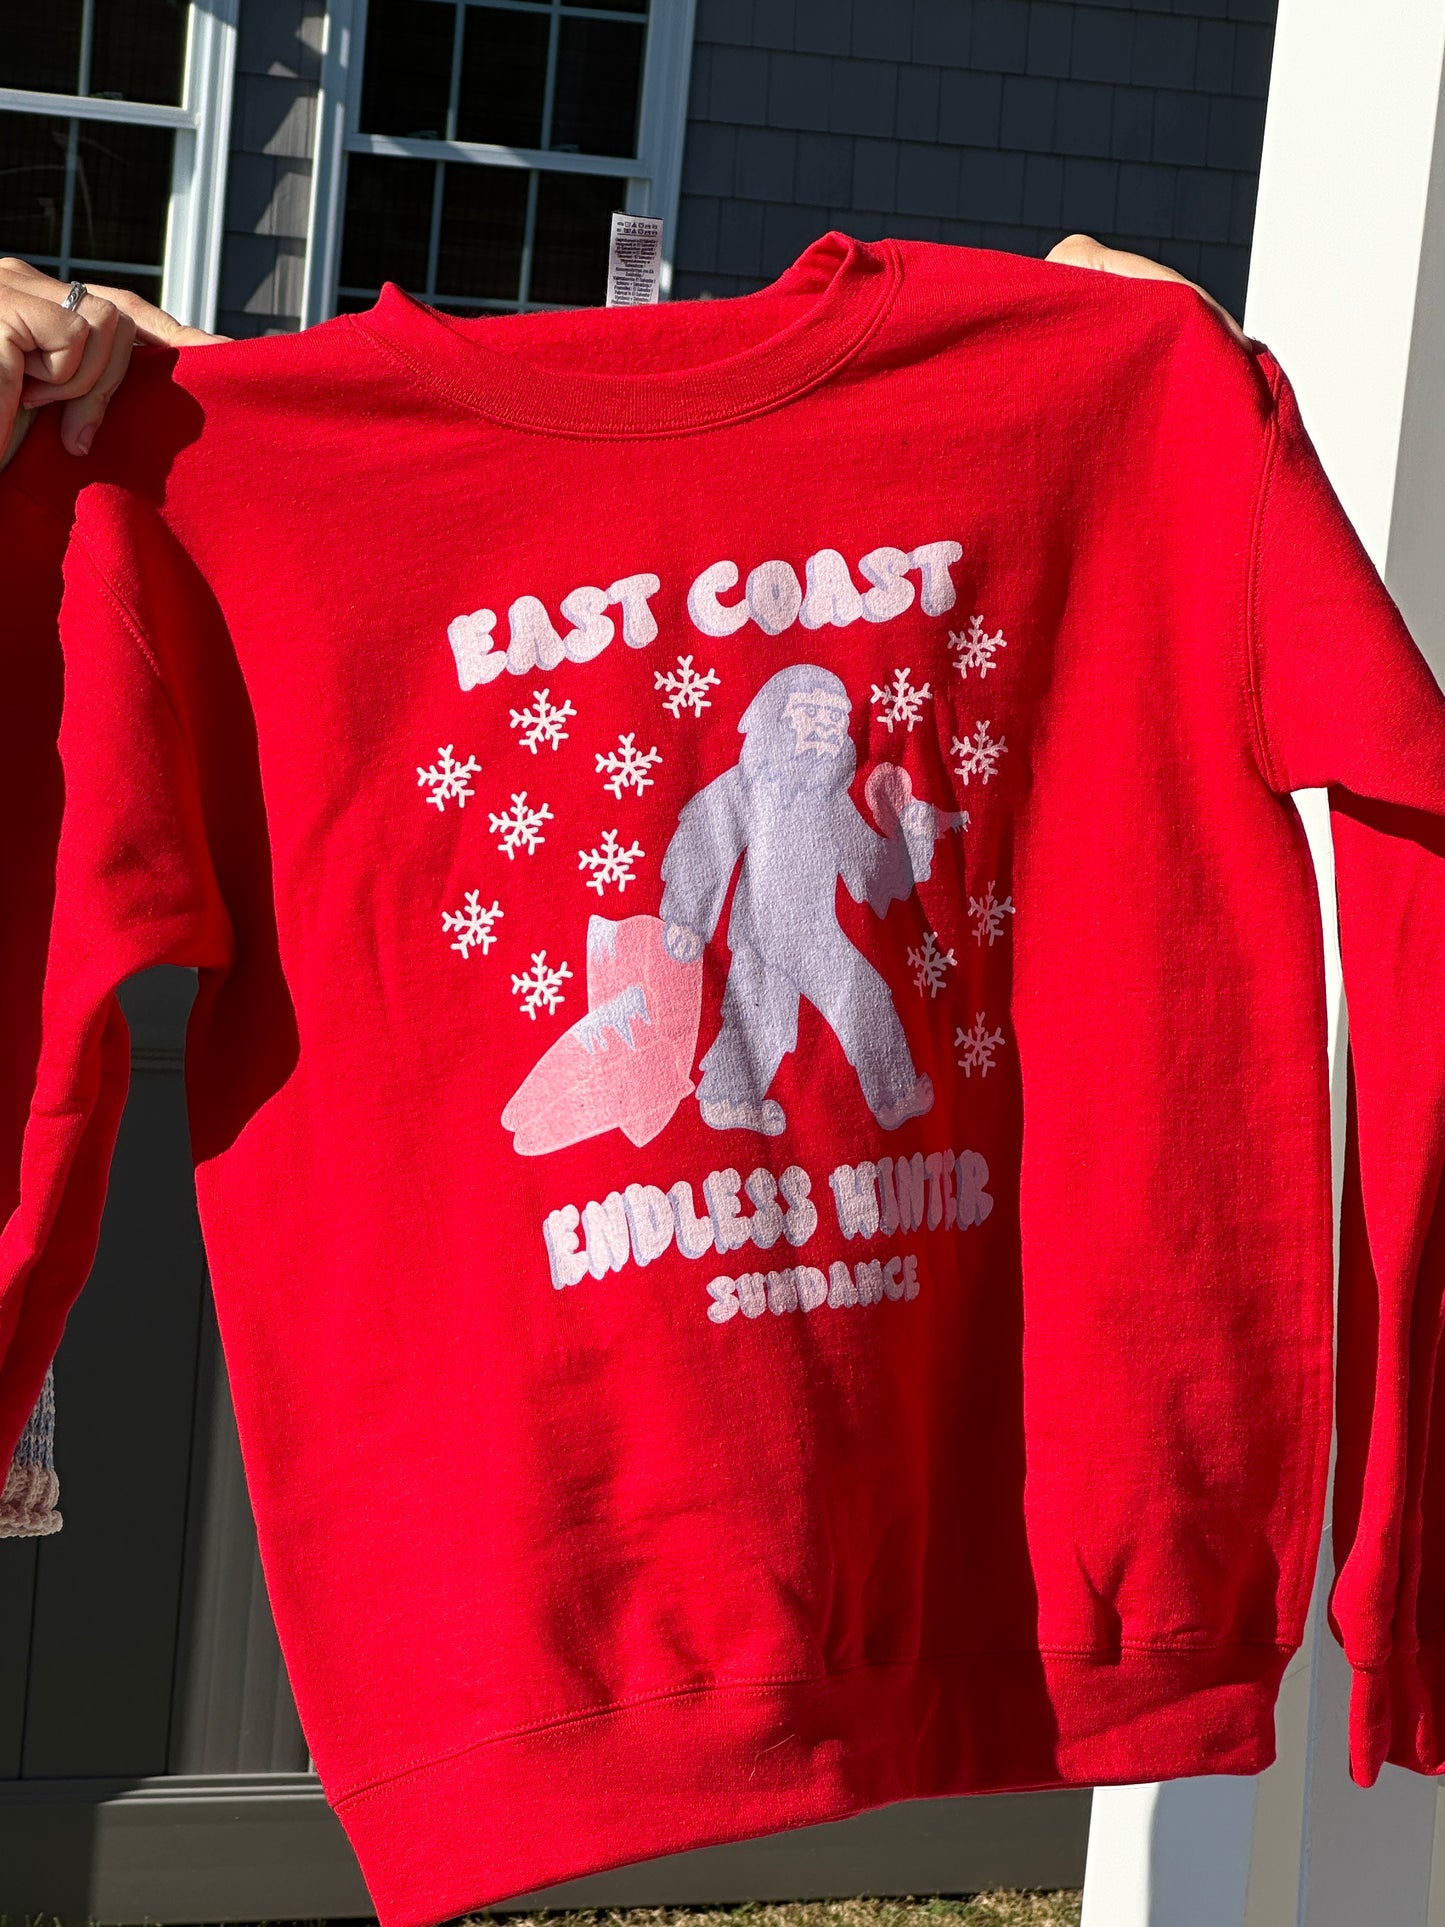 East Coast Endless Winter Crew